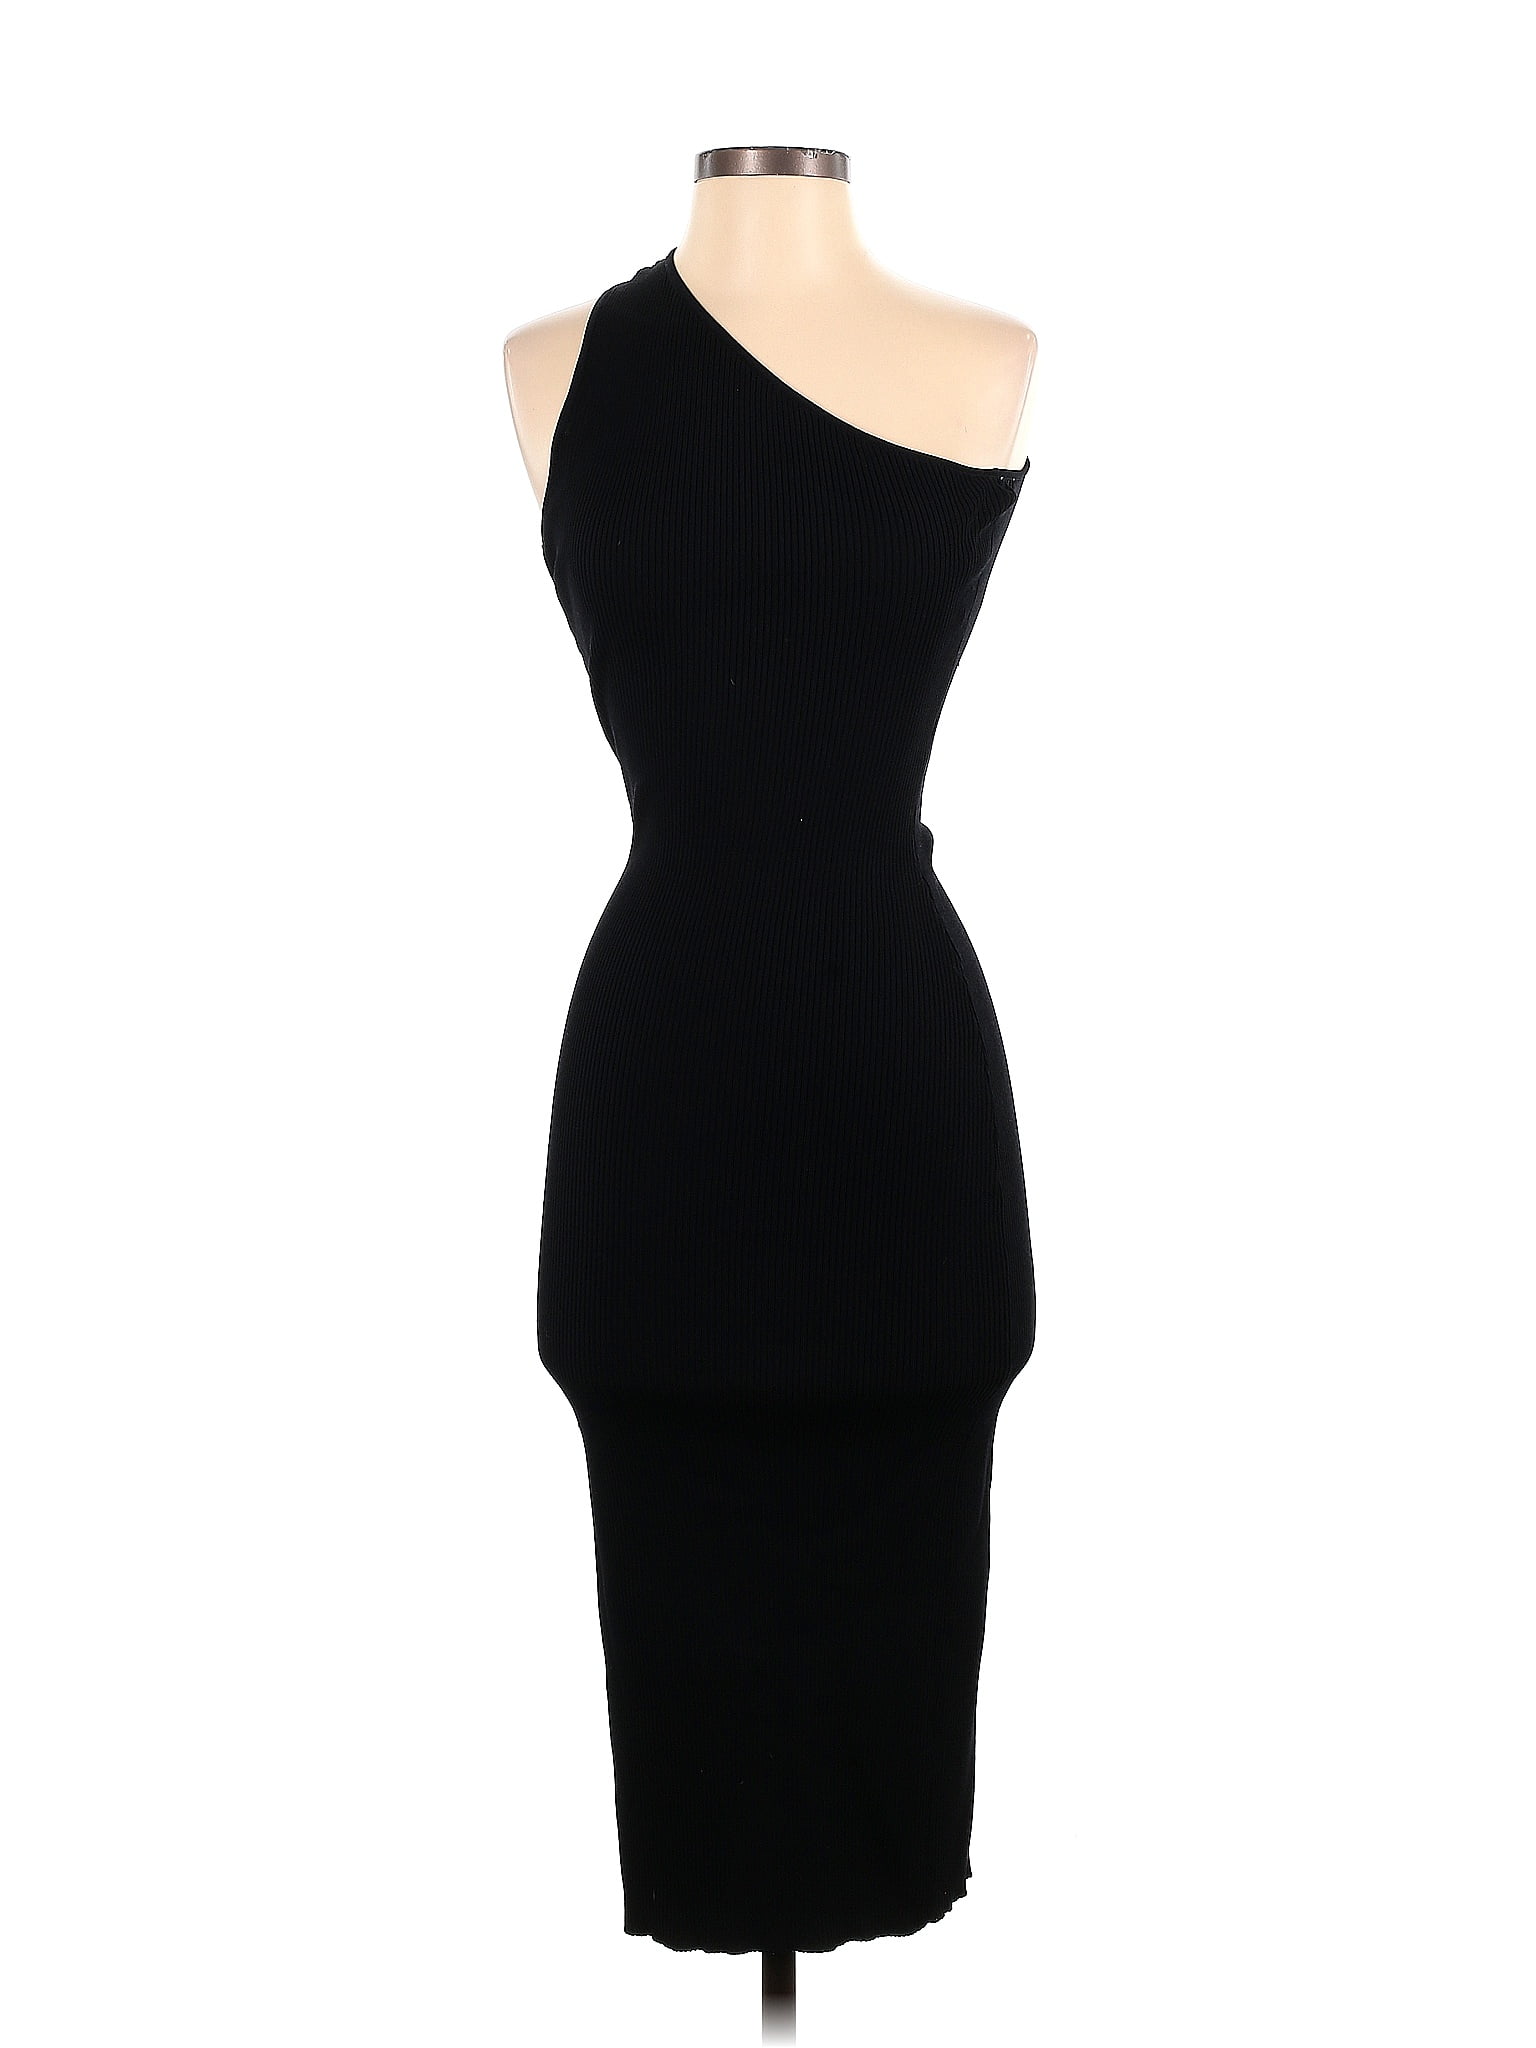 Zara Solid Black Casual Dress Size S - 40% off | ThredUp